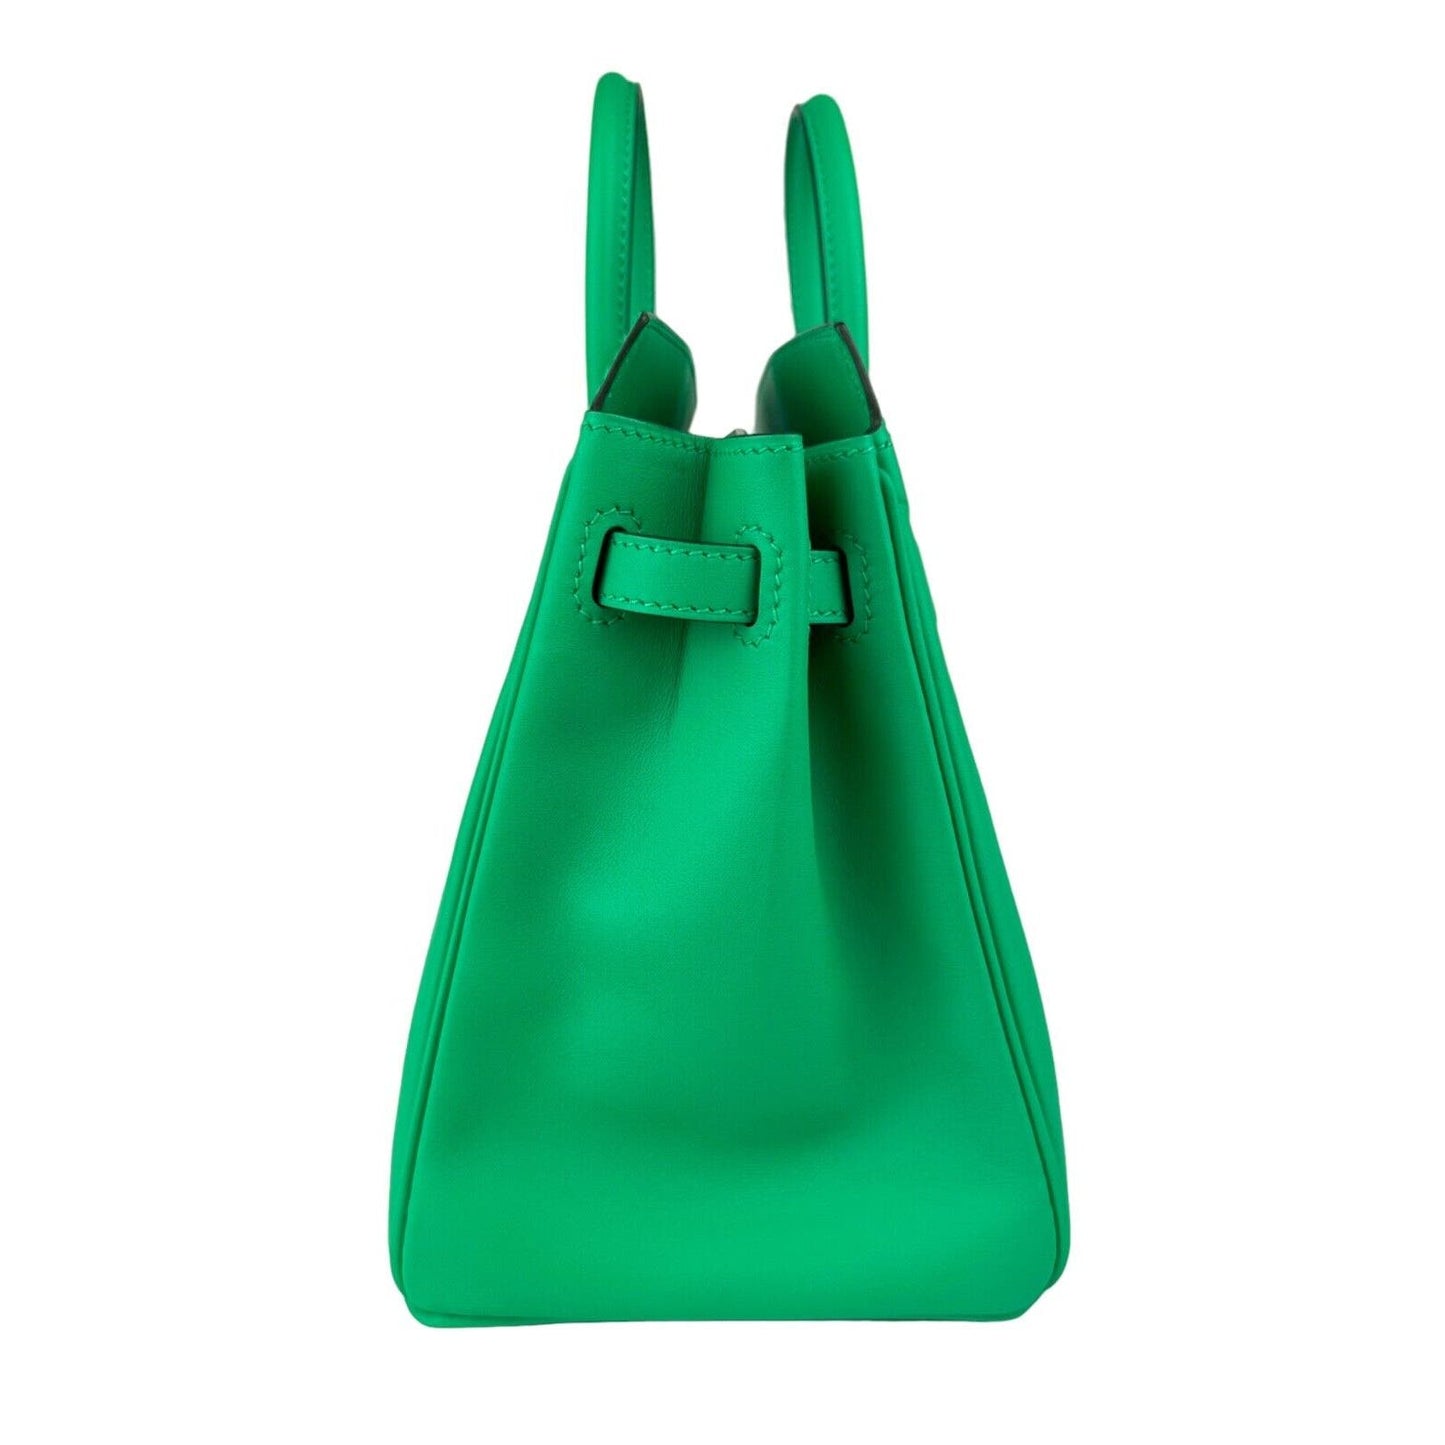 Hermes Birkin 25 Shadow Menthe Mint Green Swift Leather Handbag Bag Limited Edition